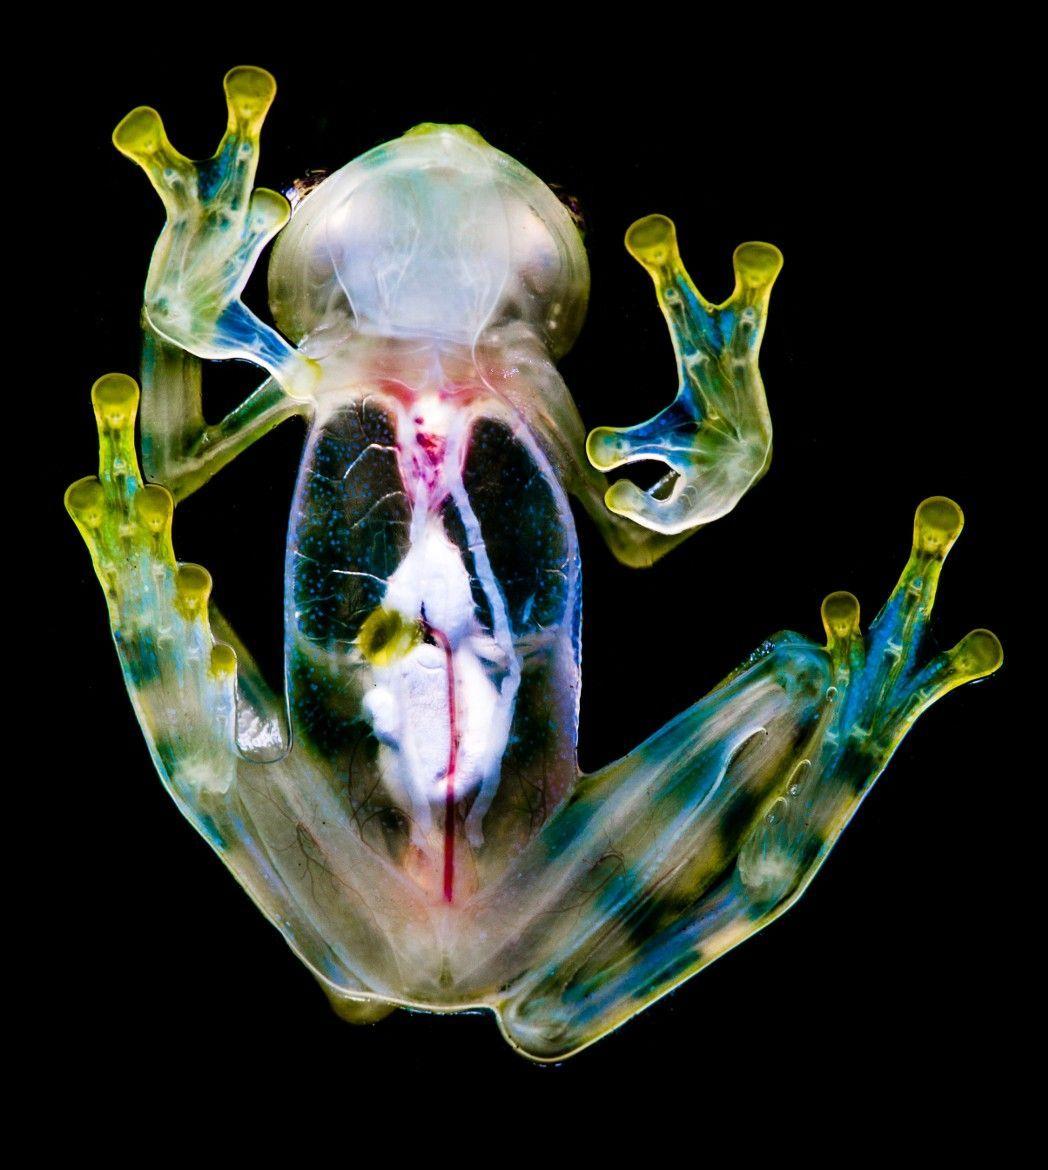 Reticulated Glass Frog. Nakєd Wildєrnєss. Glass frog